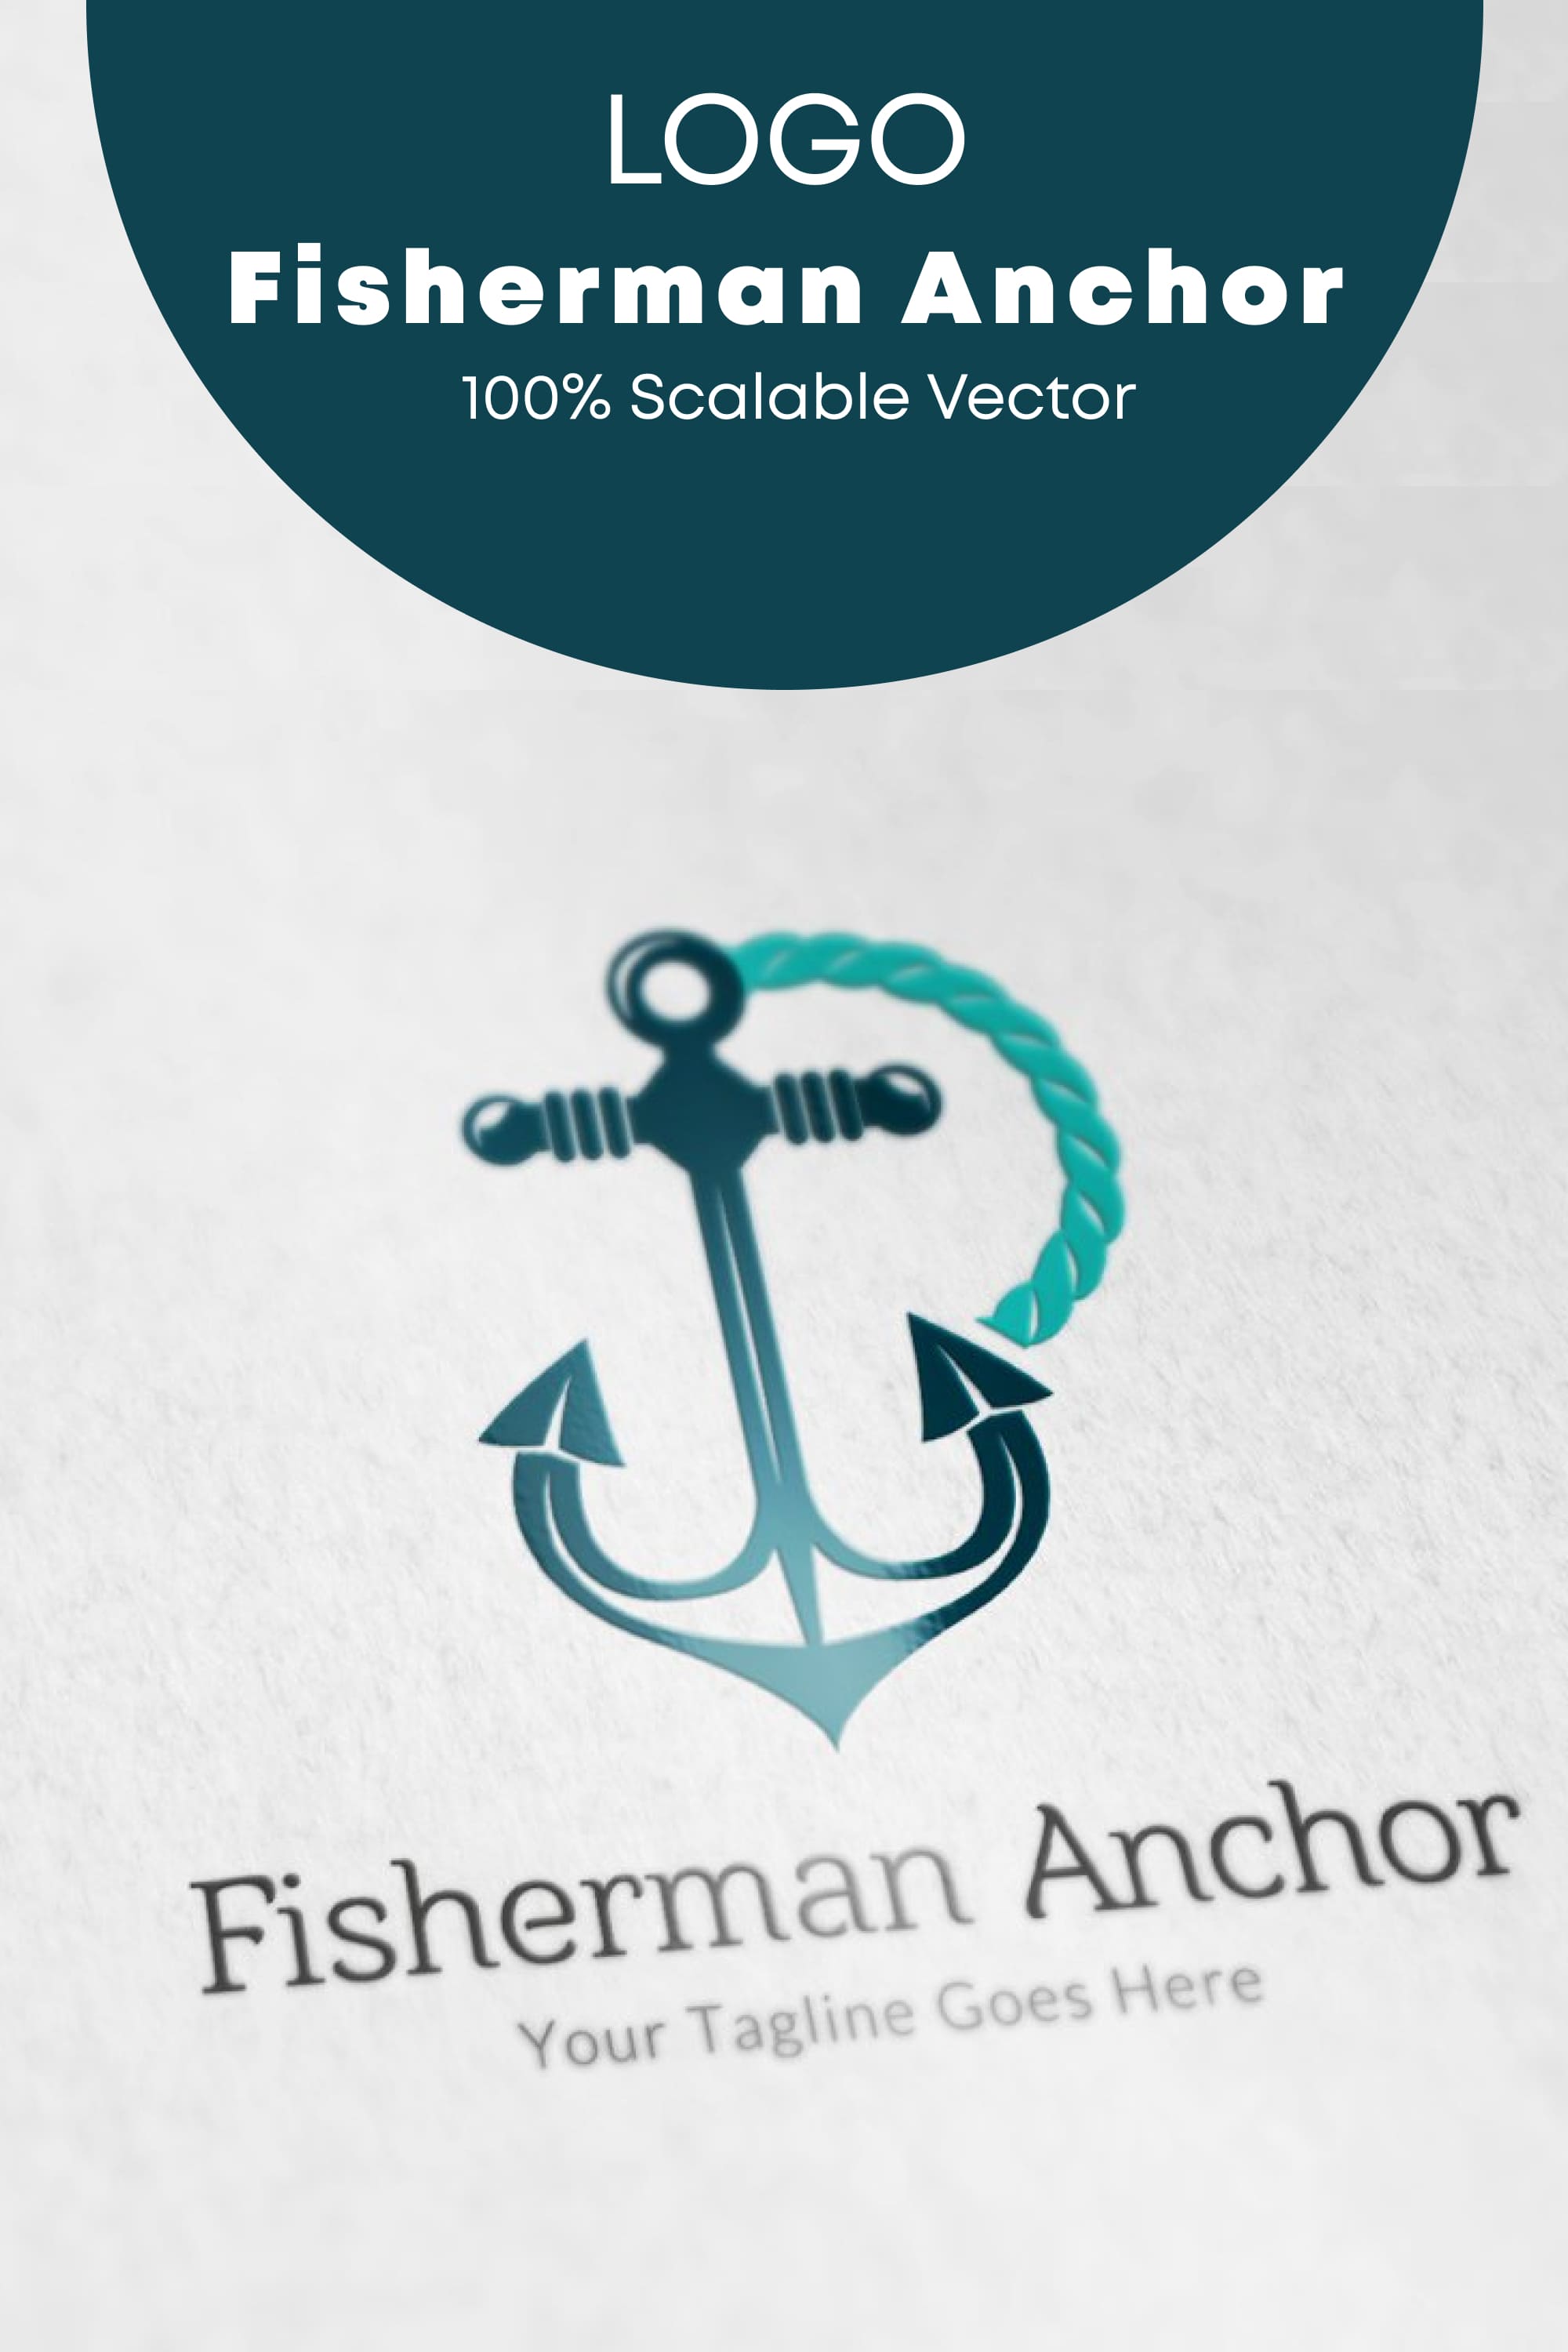 fisherman anchor logo pinterest